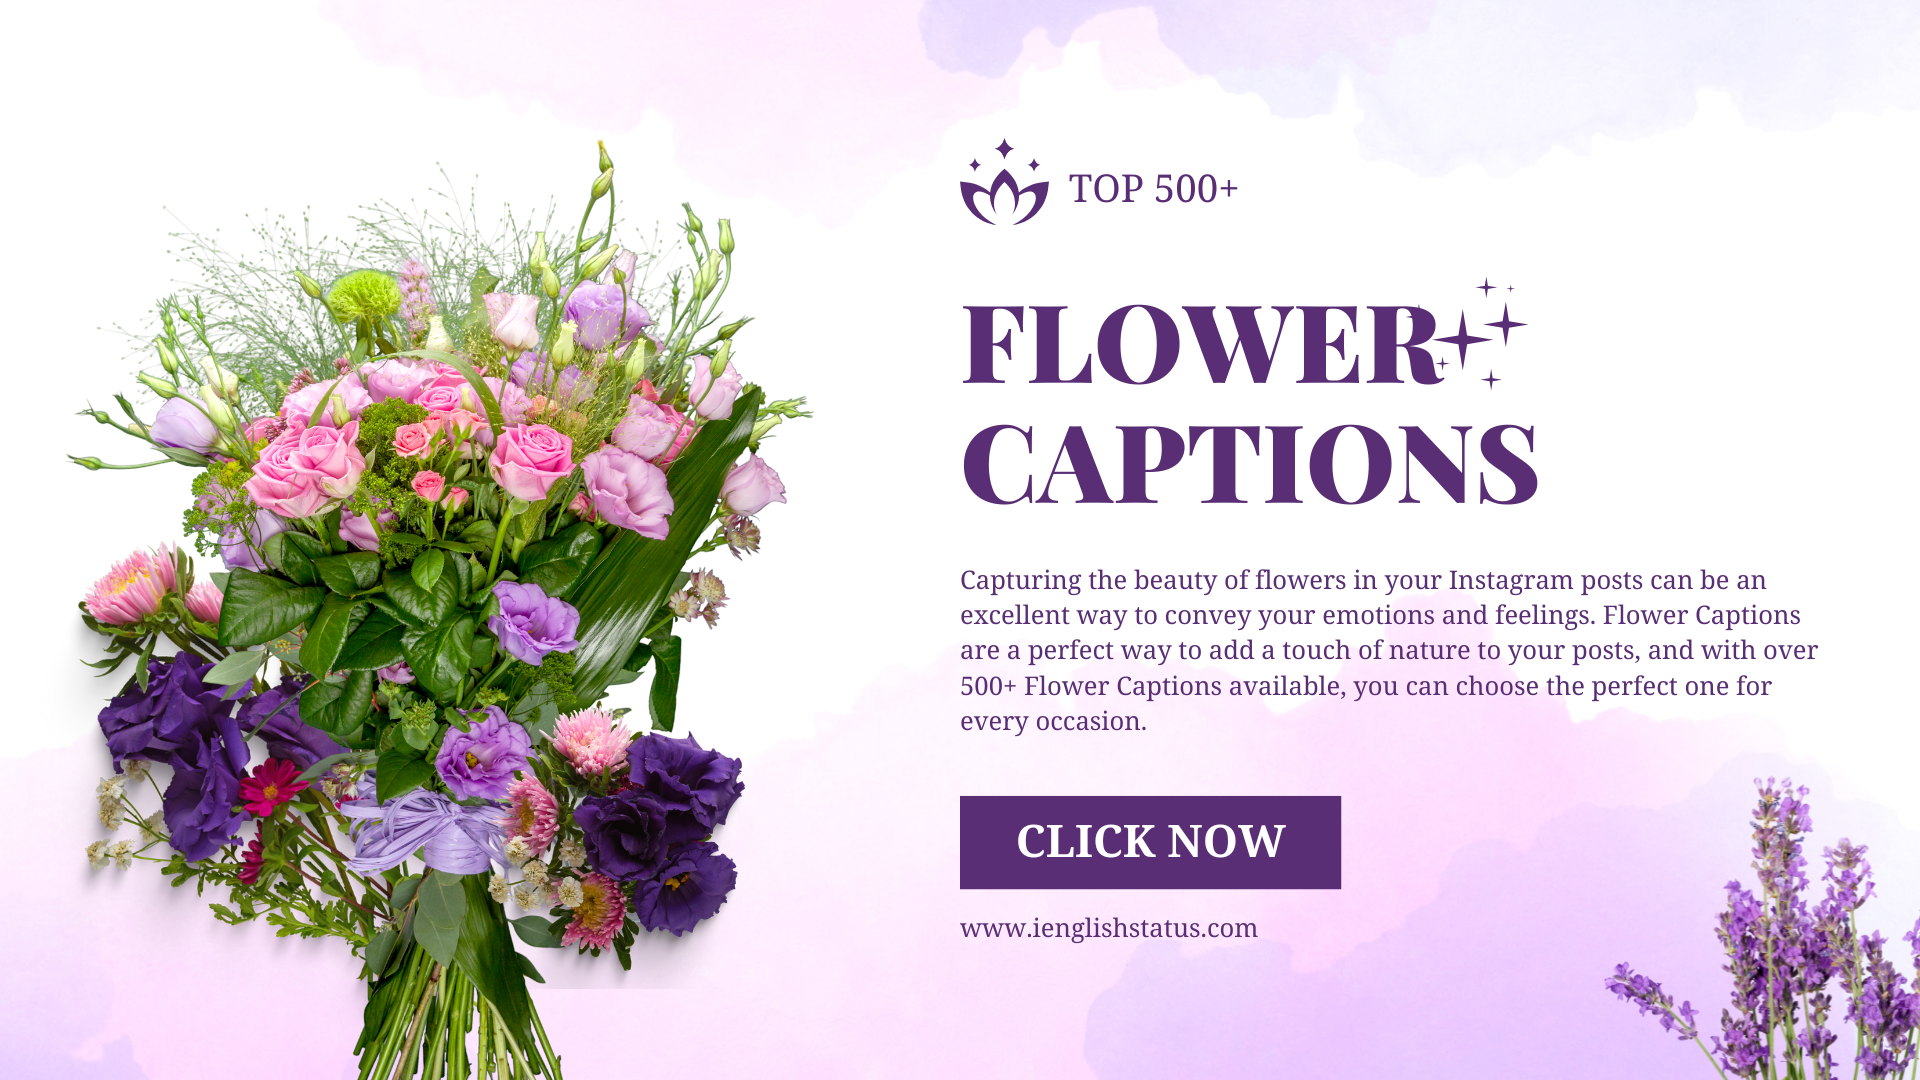 Flower Captions